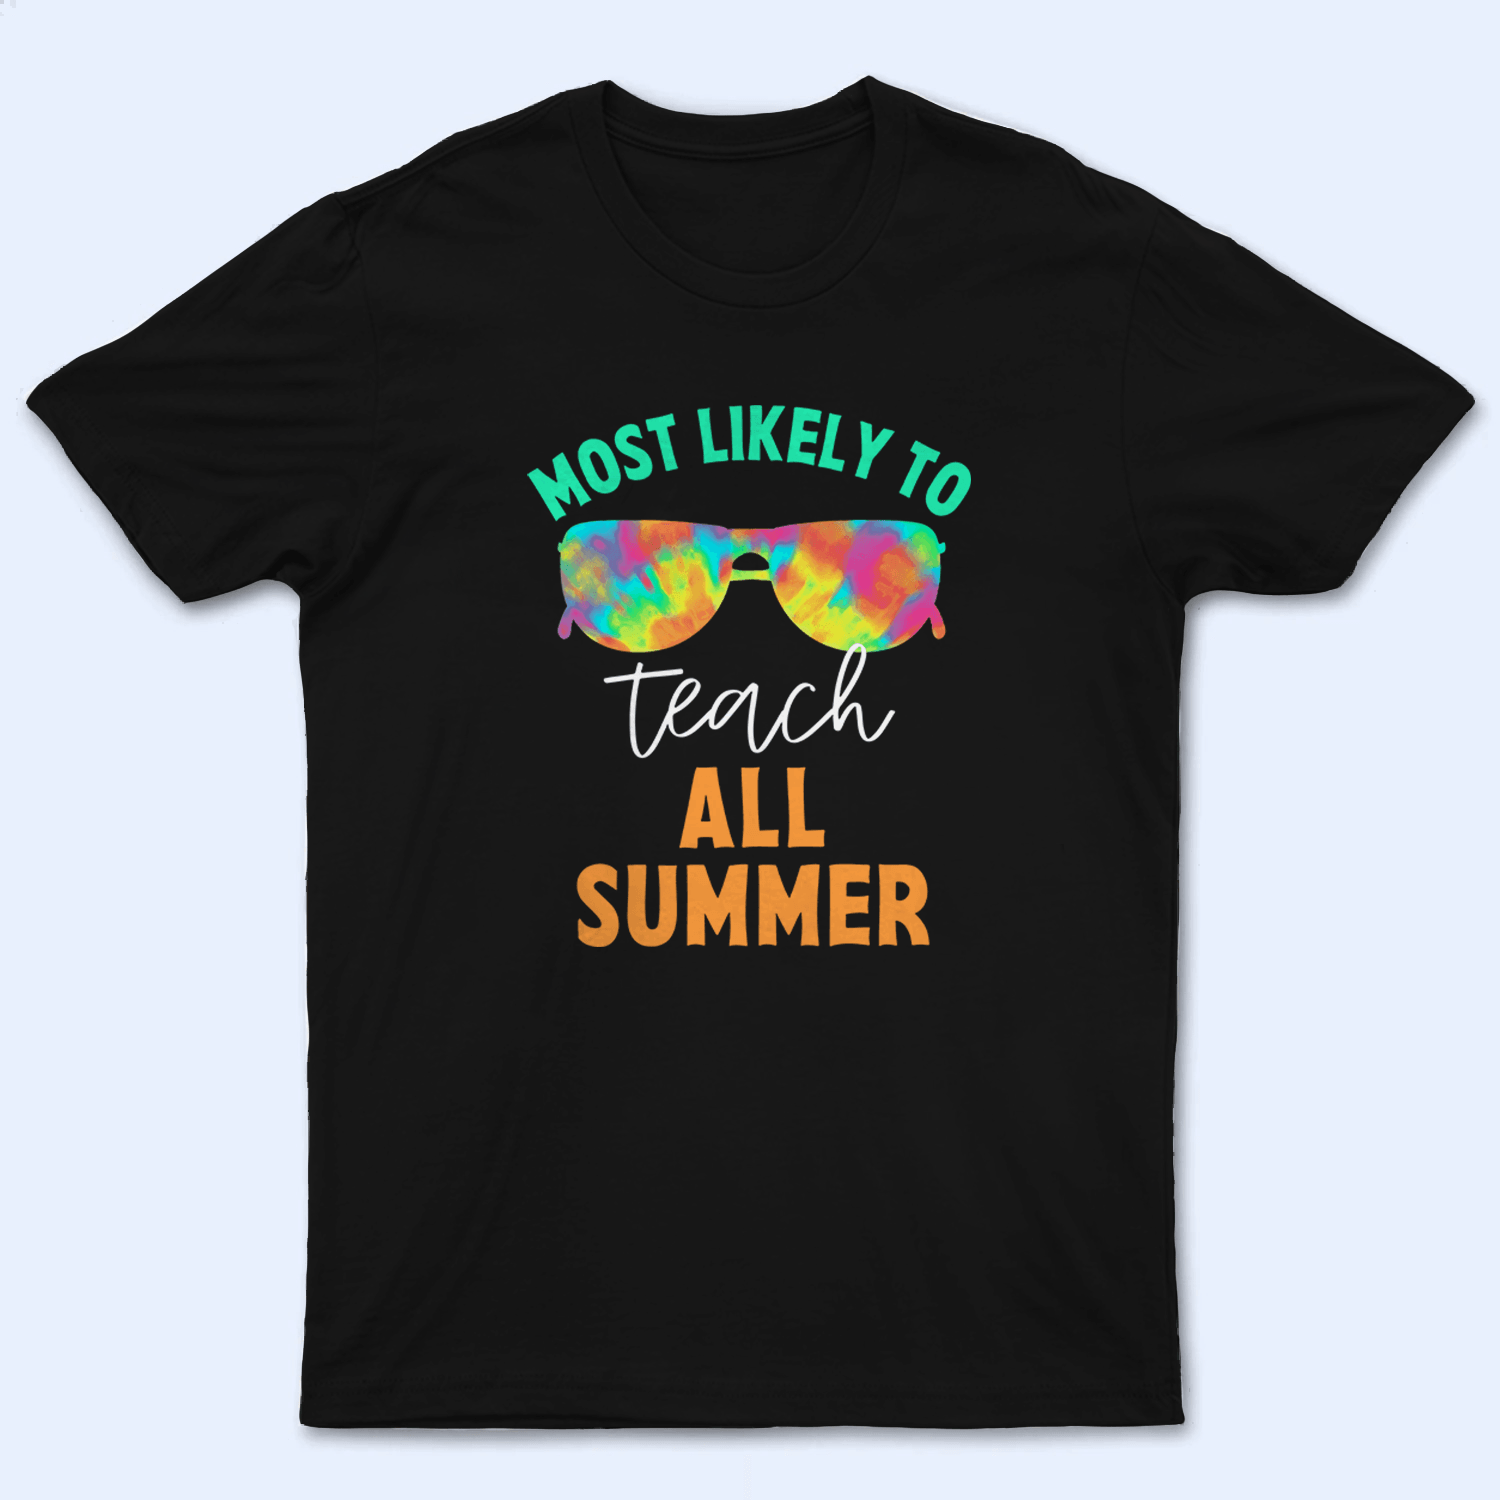 Most Likely to All Summer - Summer Break - Personalized Custom T Shirt - Birthday, Loving, Funny Gift for Teacher, Kindergarten, Preschool, Pre K, Paraprofessional - Suzitee Store